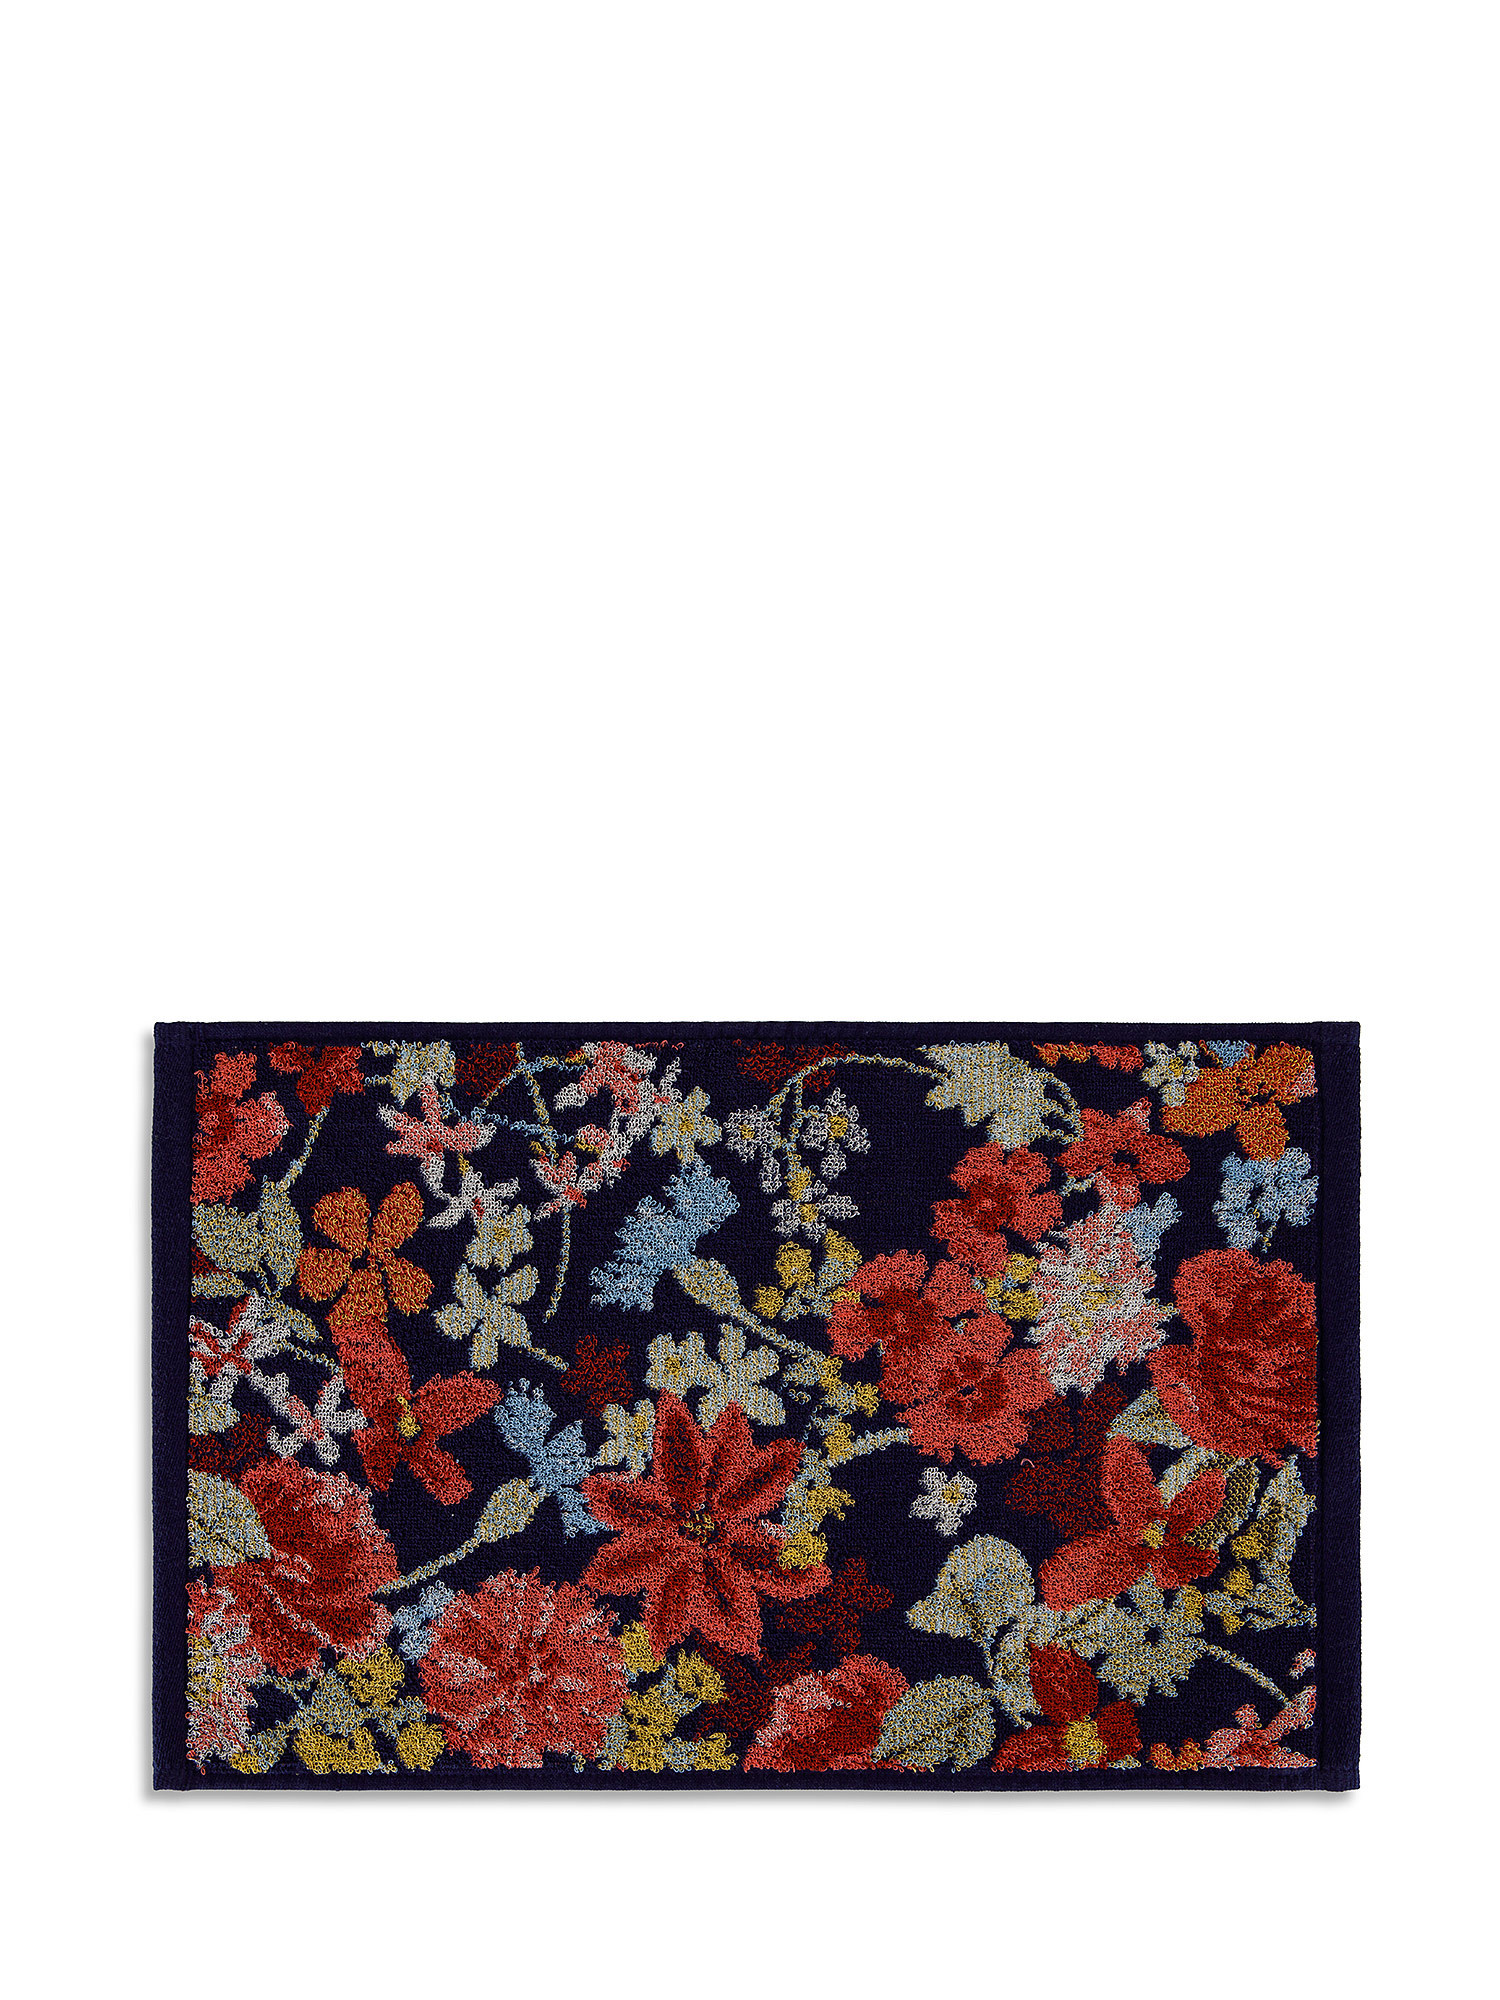 Asciugamano puro cotone tinto filo motivo floreale, Multicolor, large image number 1